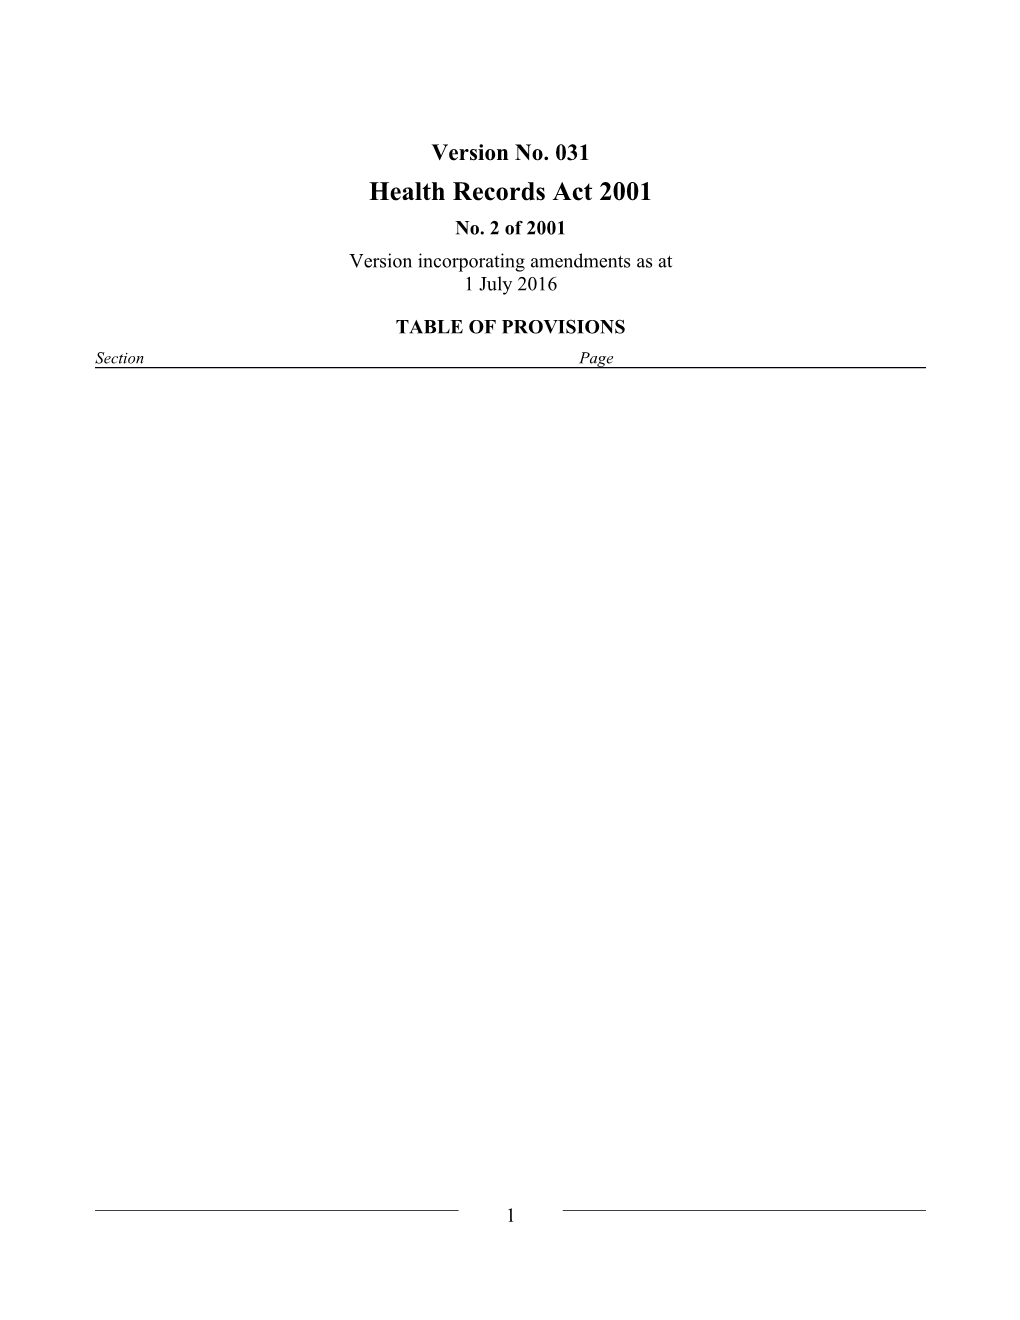 Health Records Act 2001